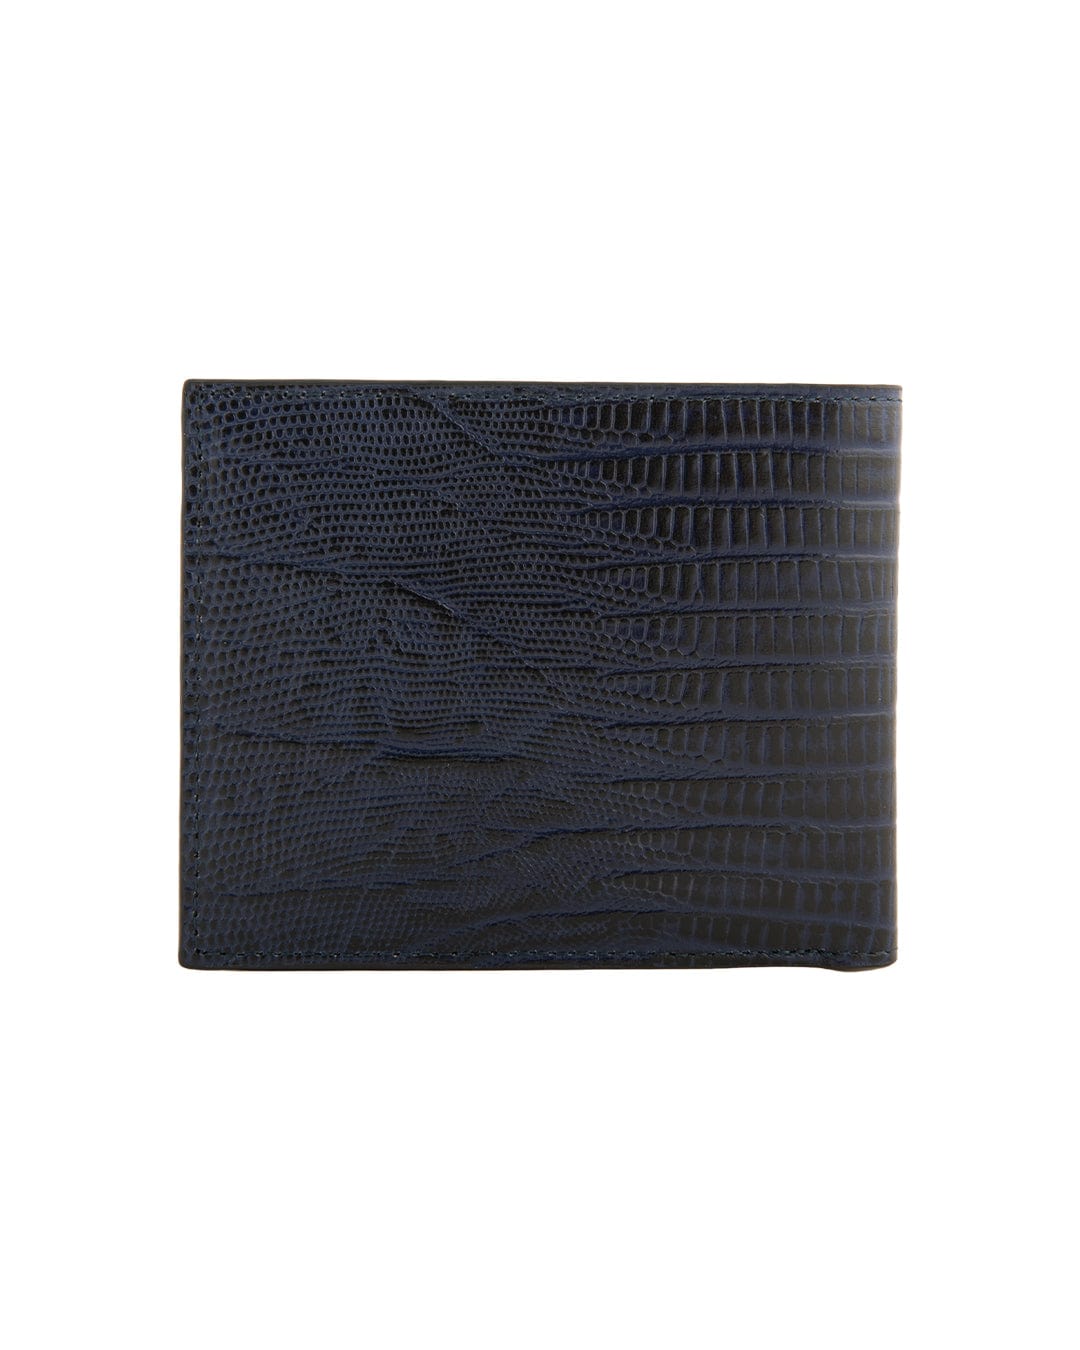 Gagliardi Wallets ONE SIZE Gagliardi Imitation Snake Skin Leather Navy Wallet